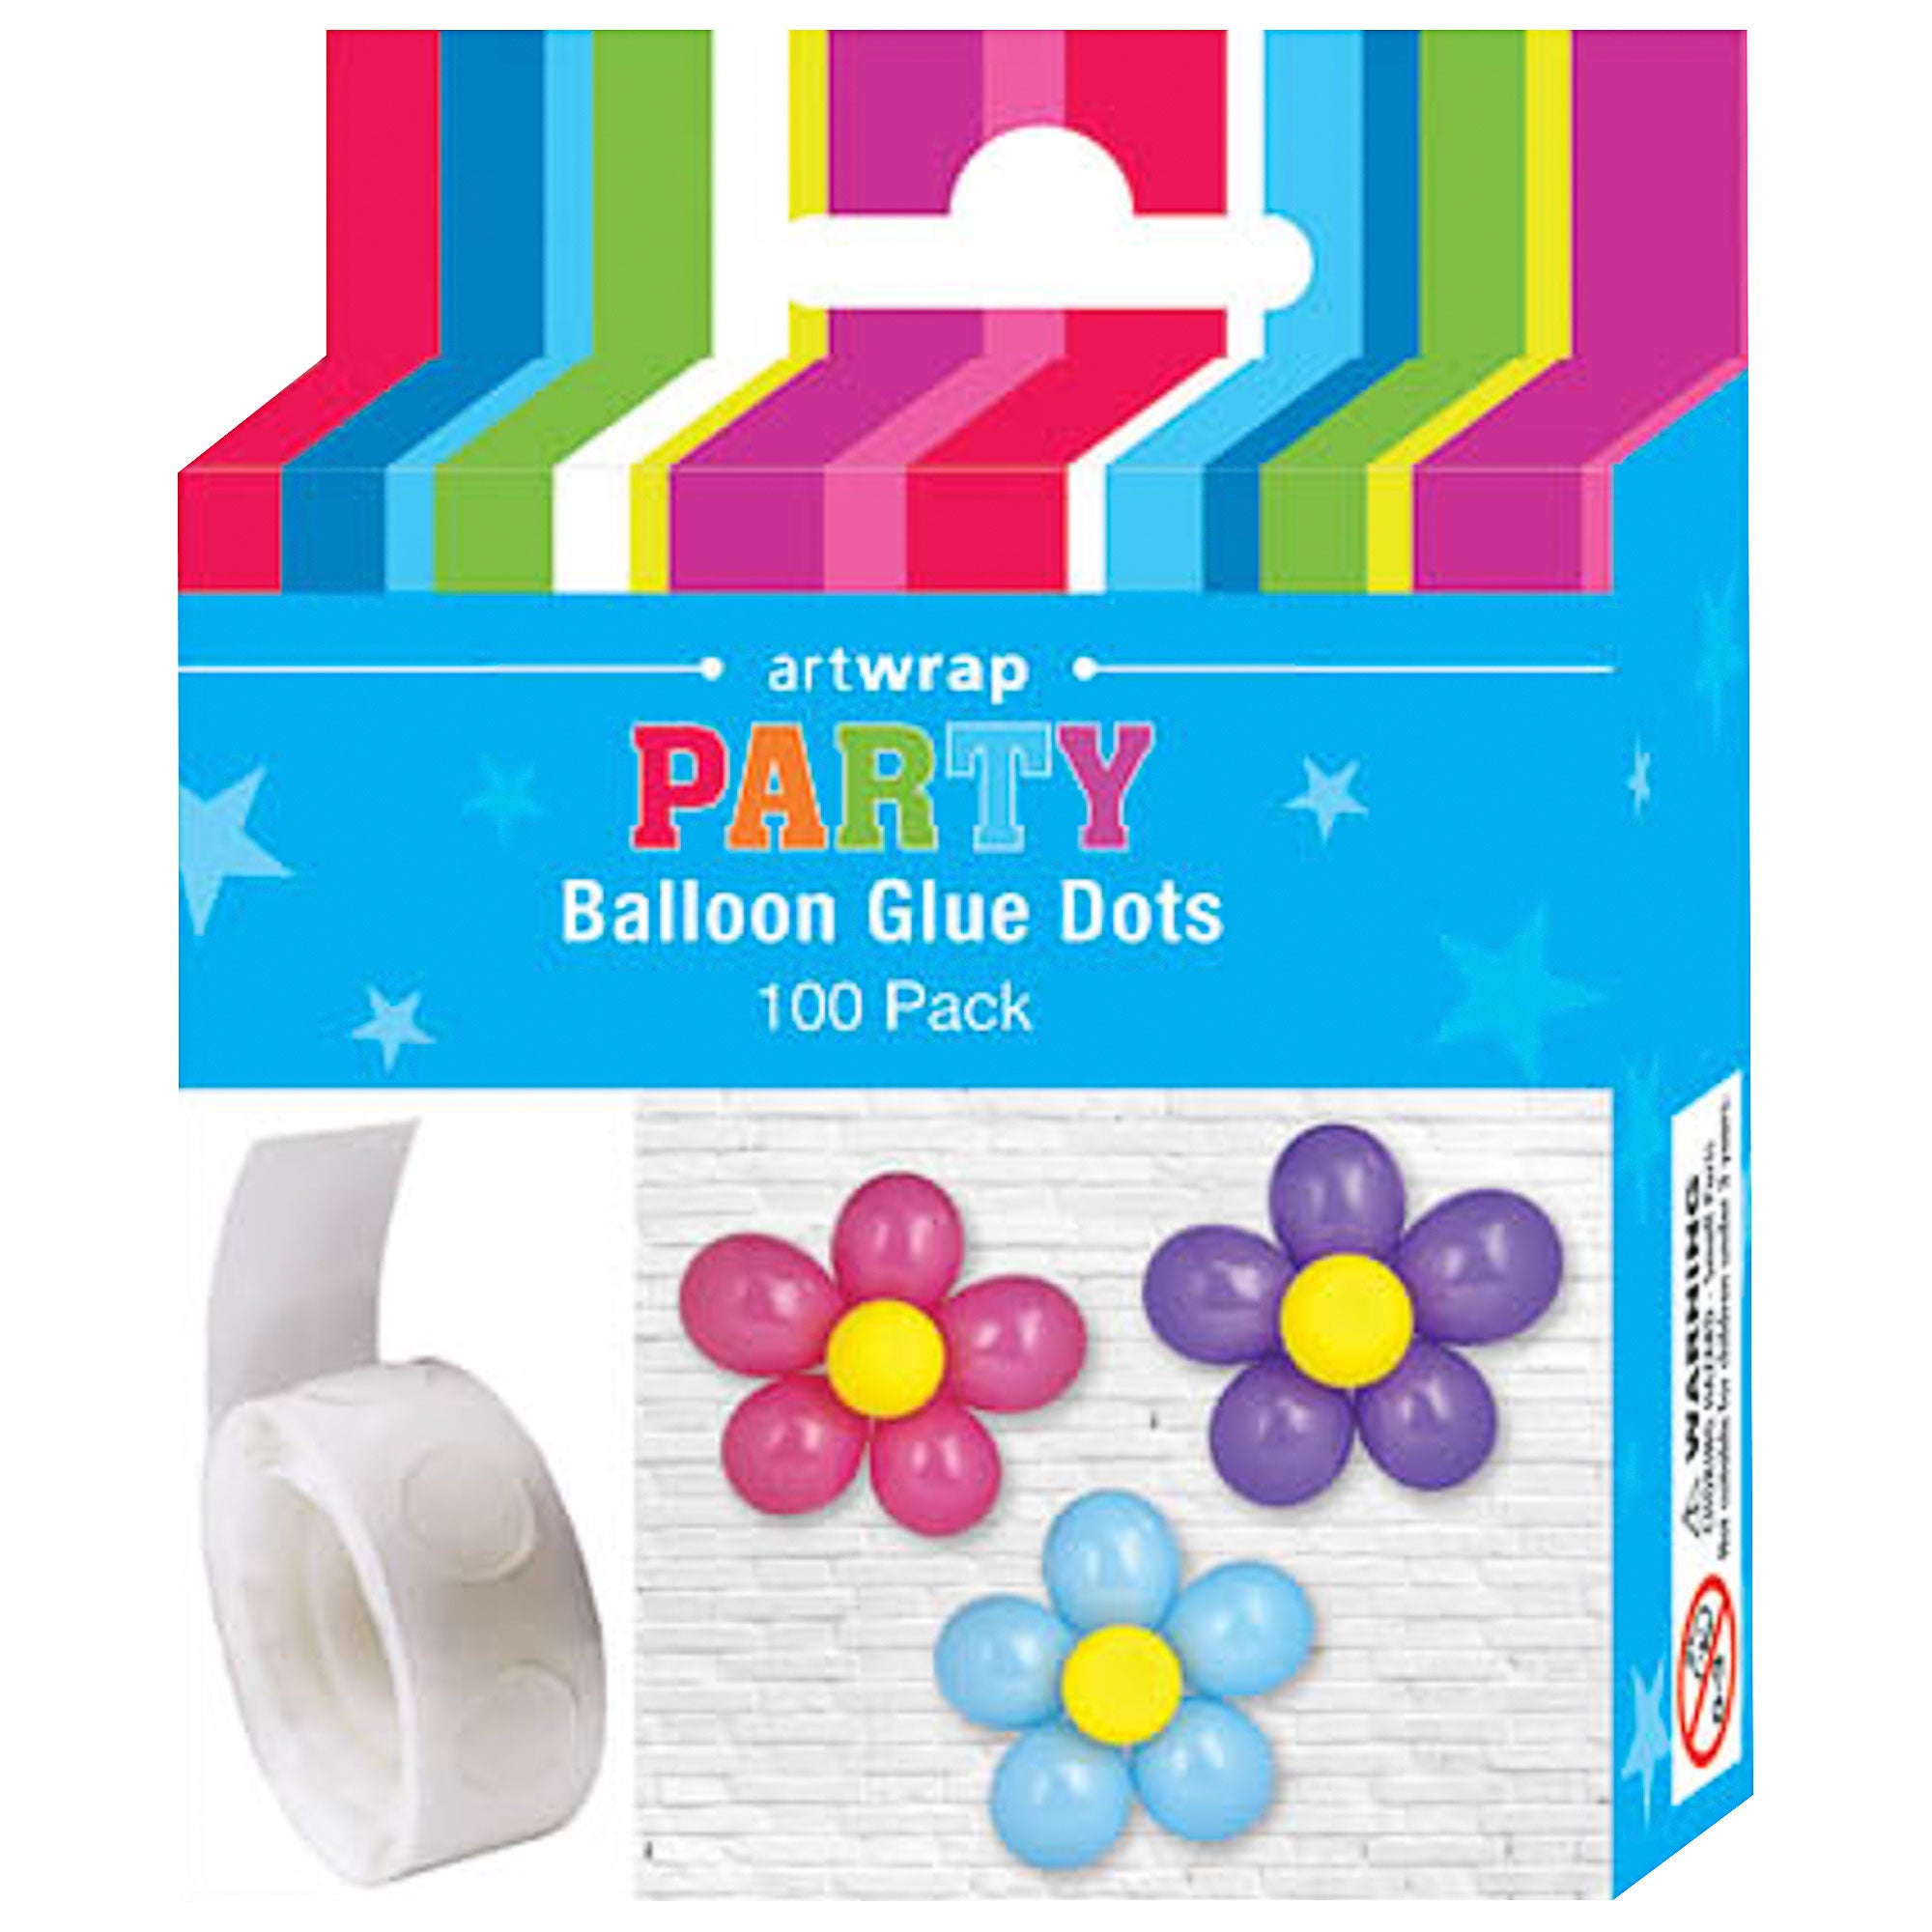 Balloon Glue Dots